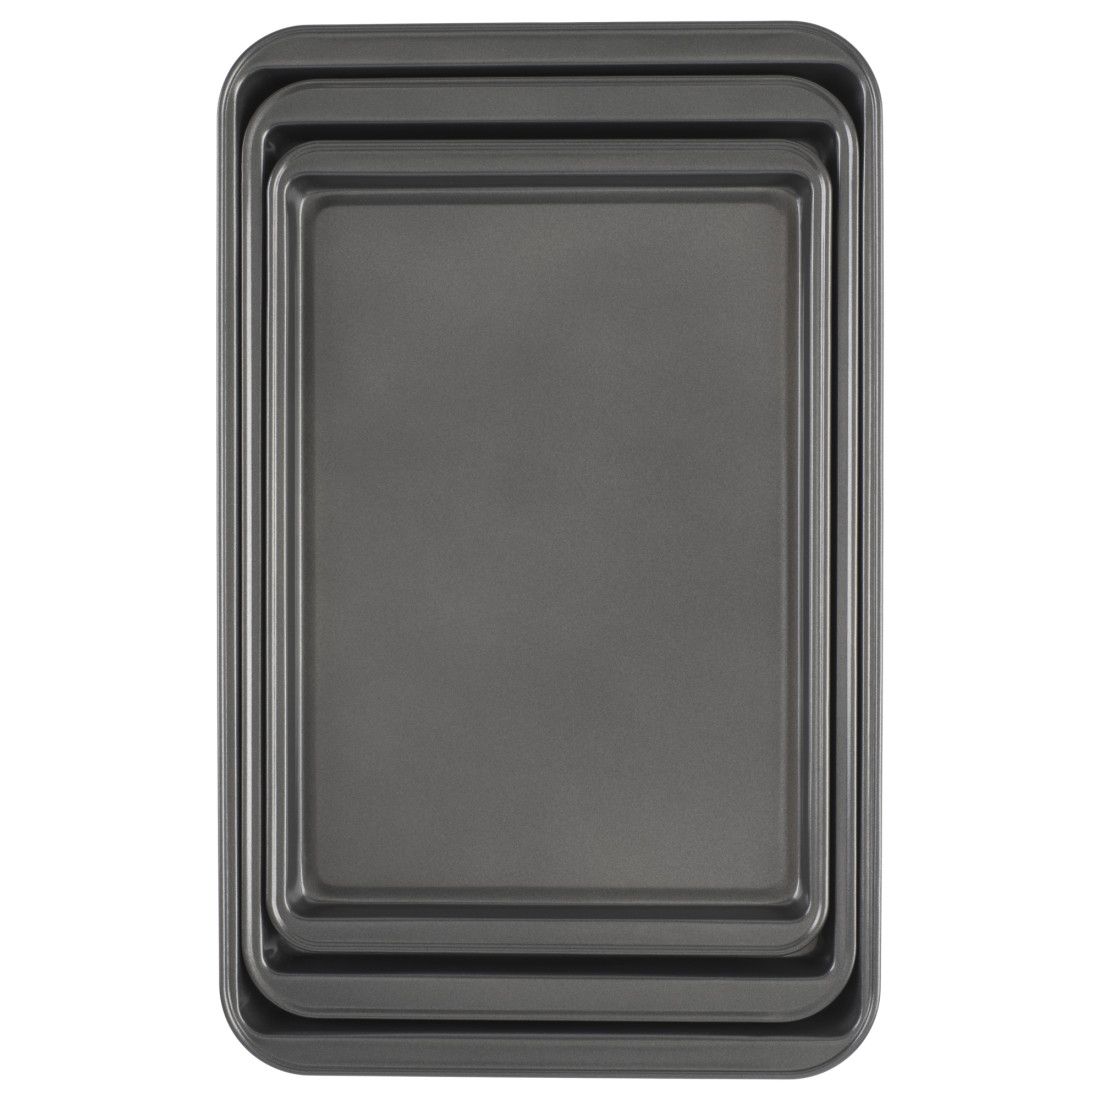 Home Basics Non-stick 15” x 21” Steel Baking Sheet, Grey